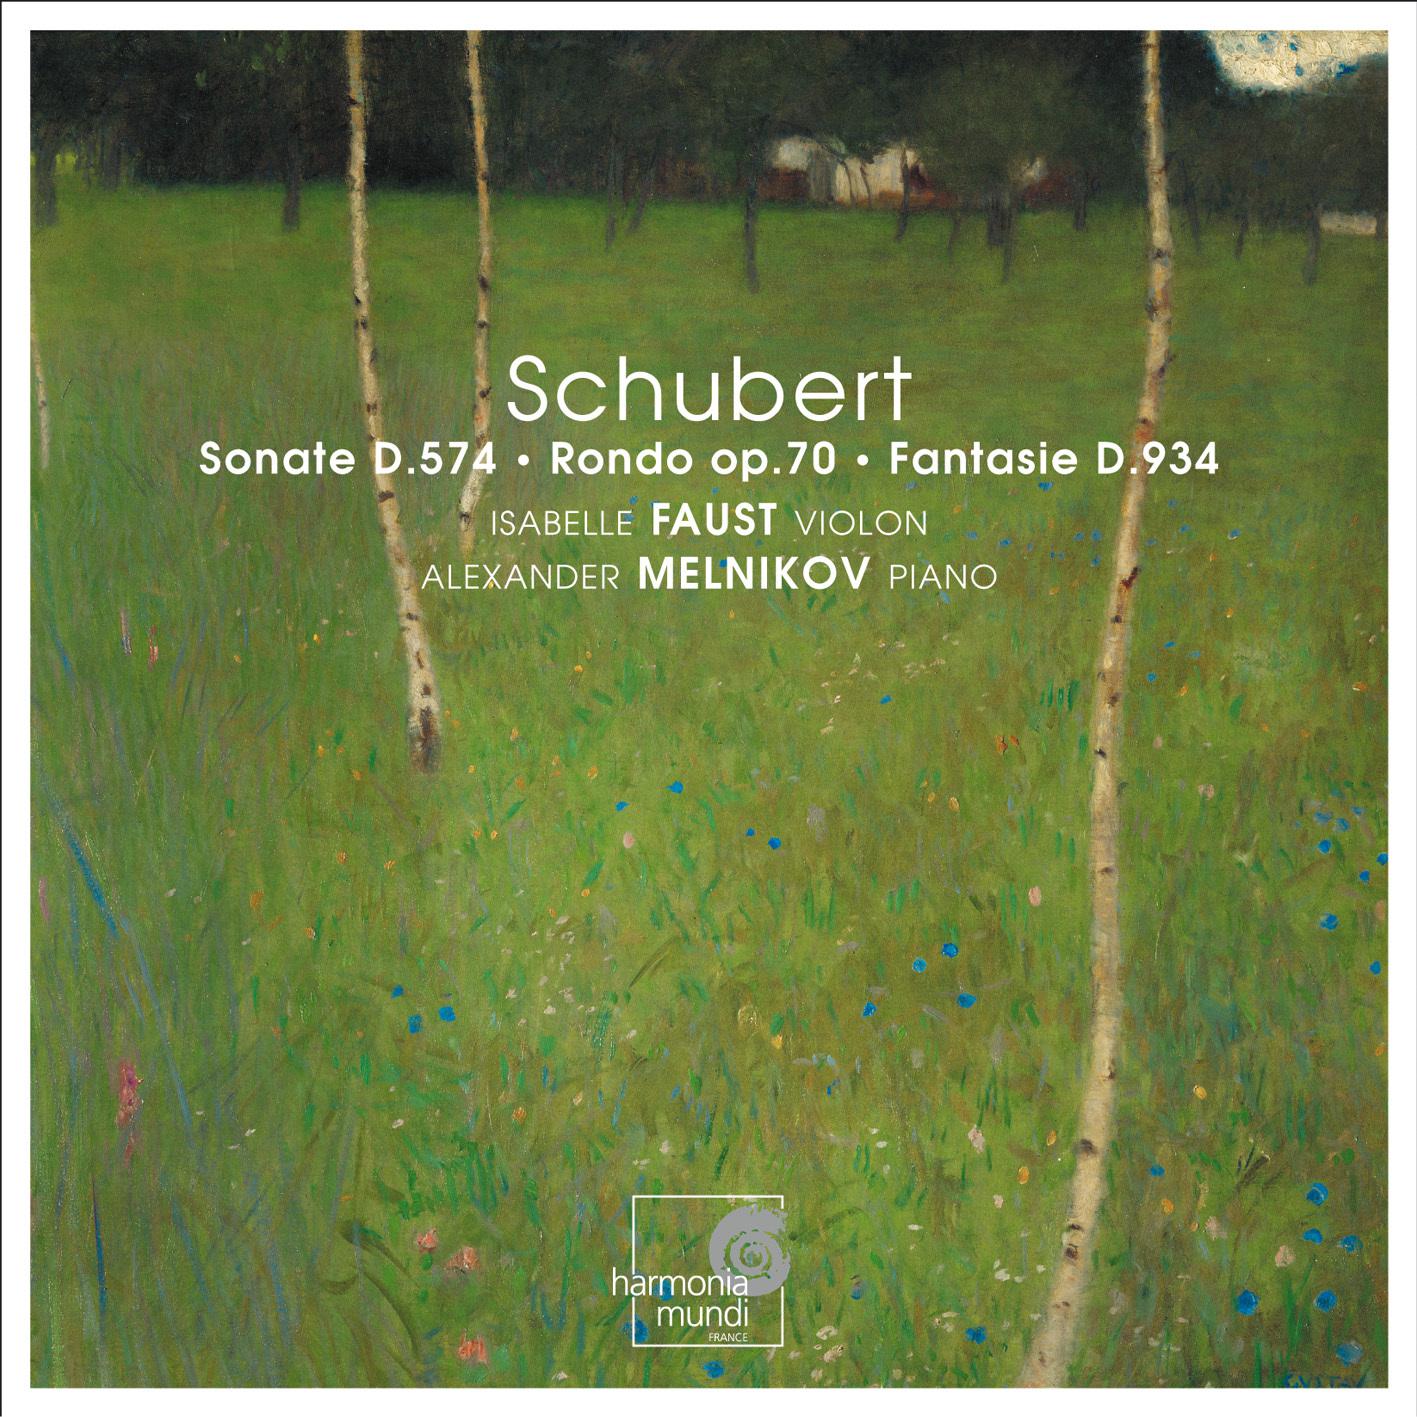 Sonate en La majeur, Op. posth.162, D.574: IV. Allegro vivace